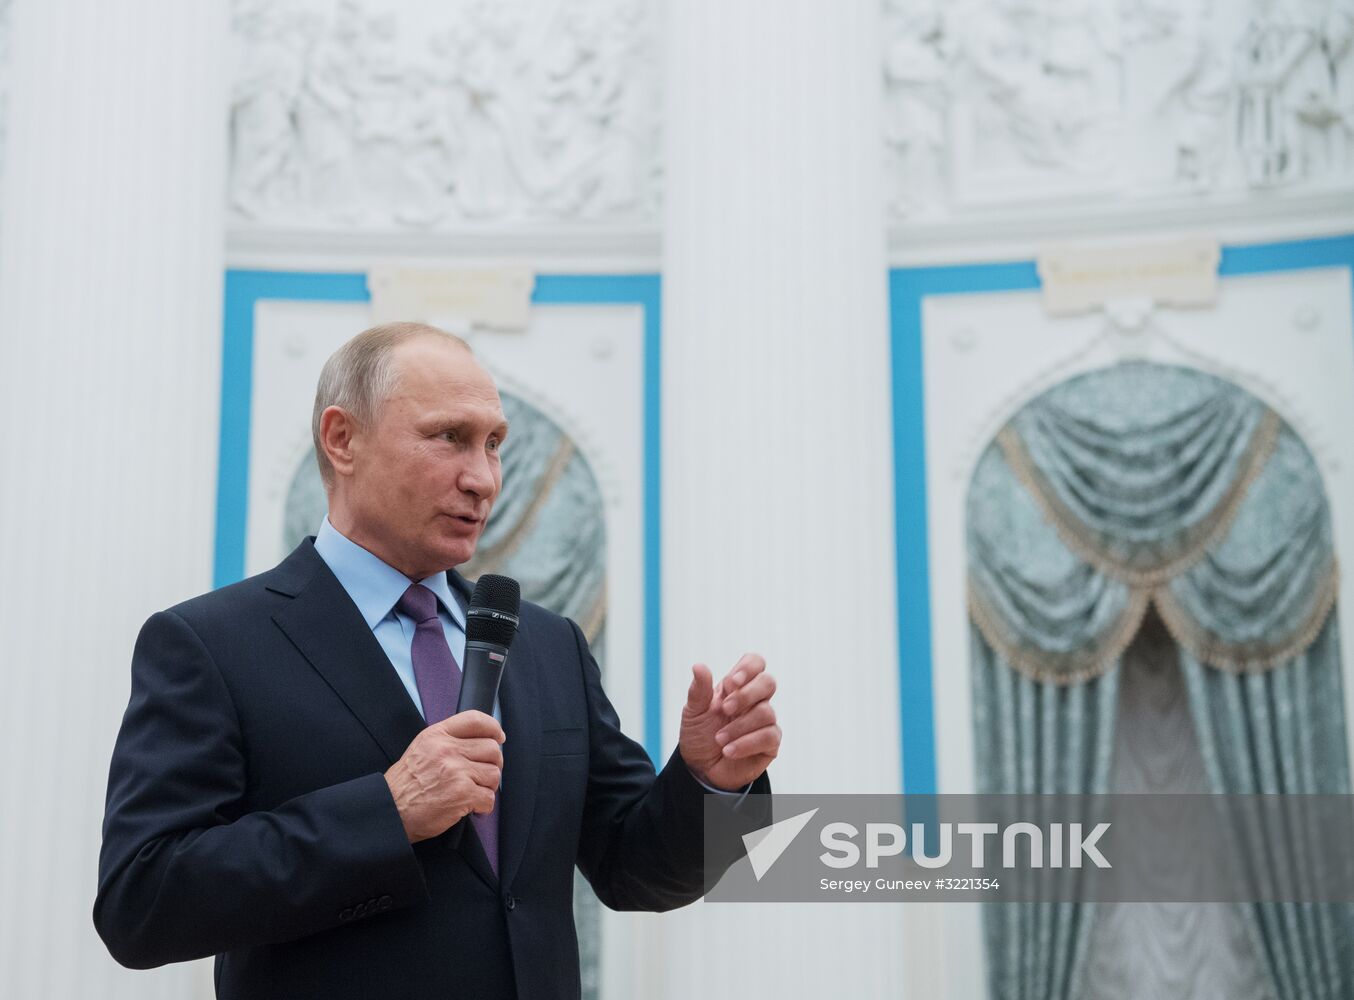 President Vladimir Putin holds meeting with WorldSkills Russian blue-collar professionals' team